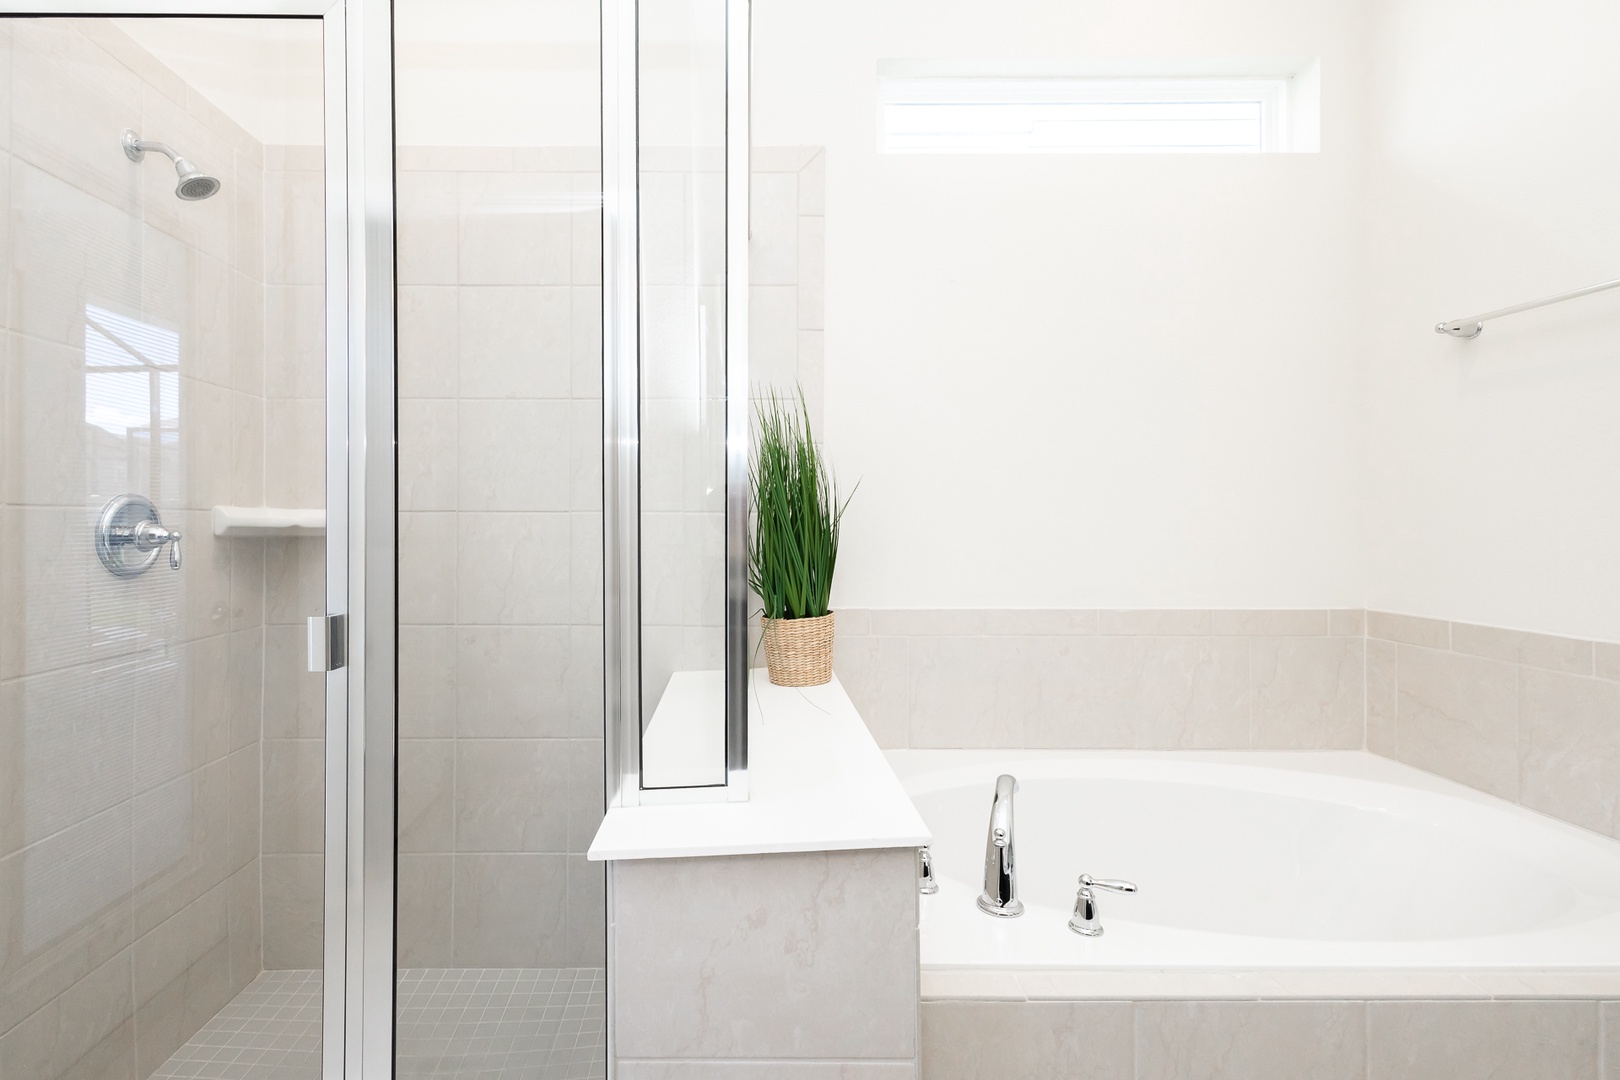 The 1st floor king en suite includes a dual vanity, glass shower, & soaking tub